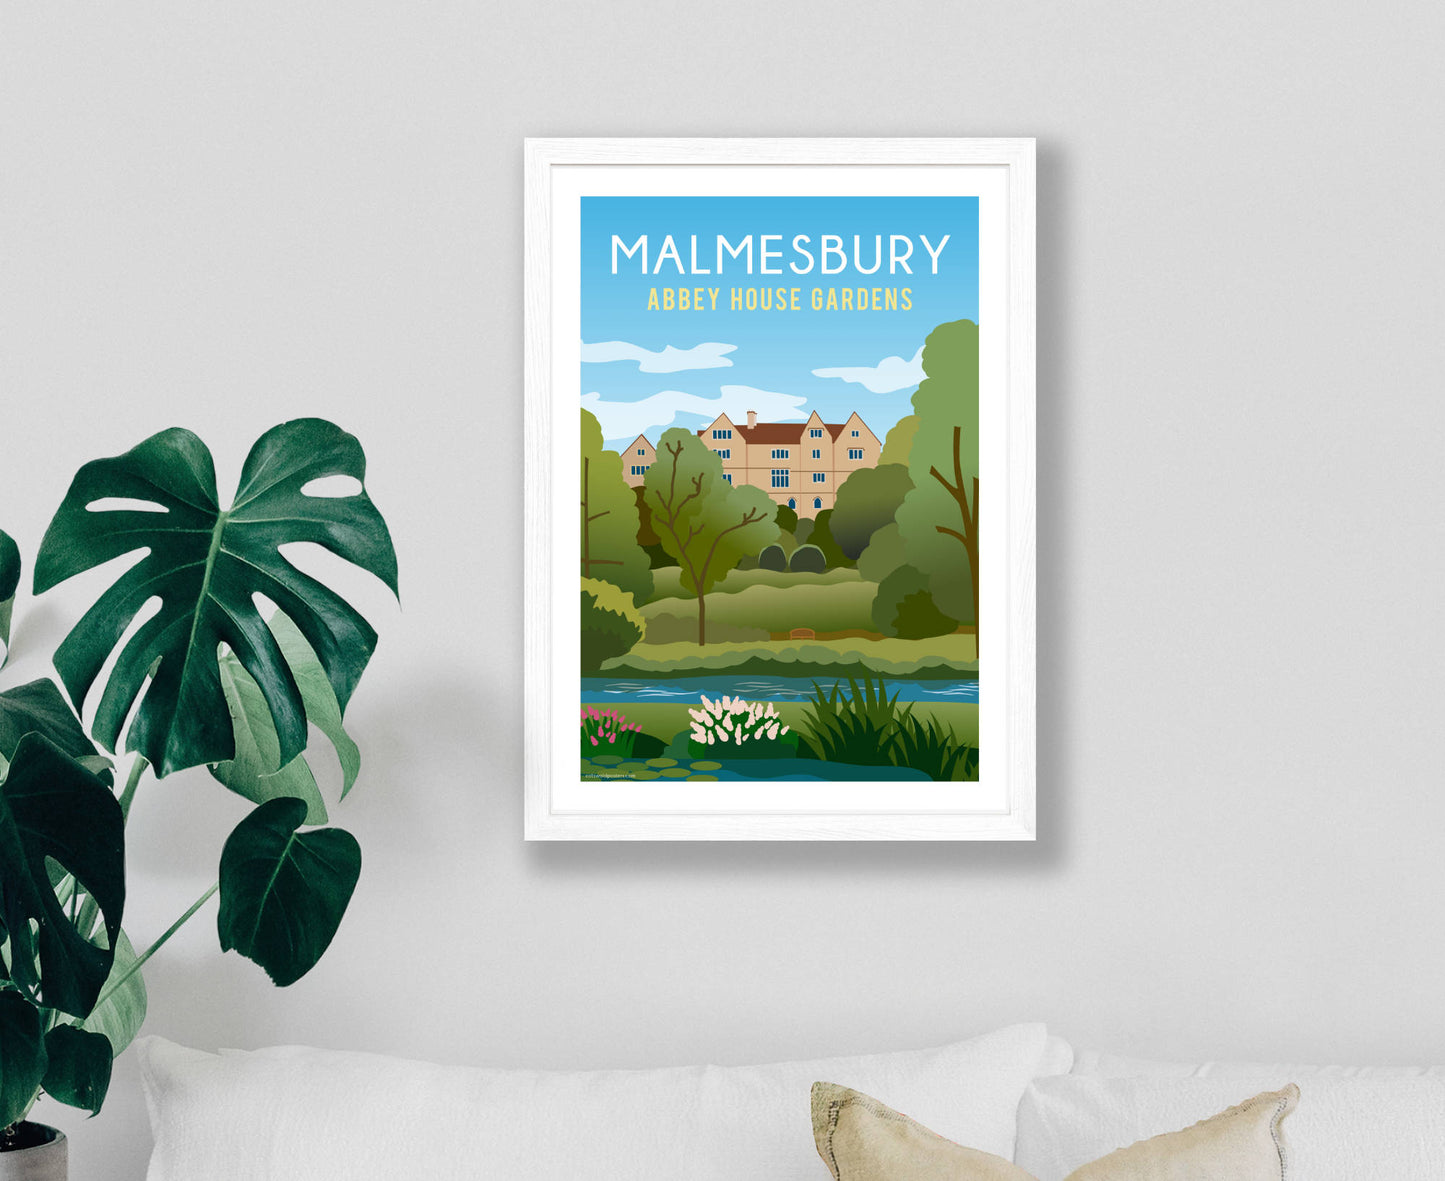 Malmesbury Abbey House Gardens Poster in white frame